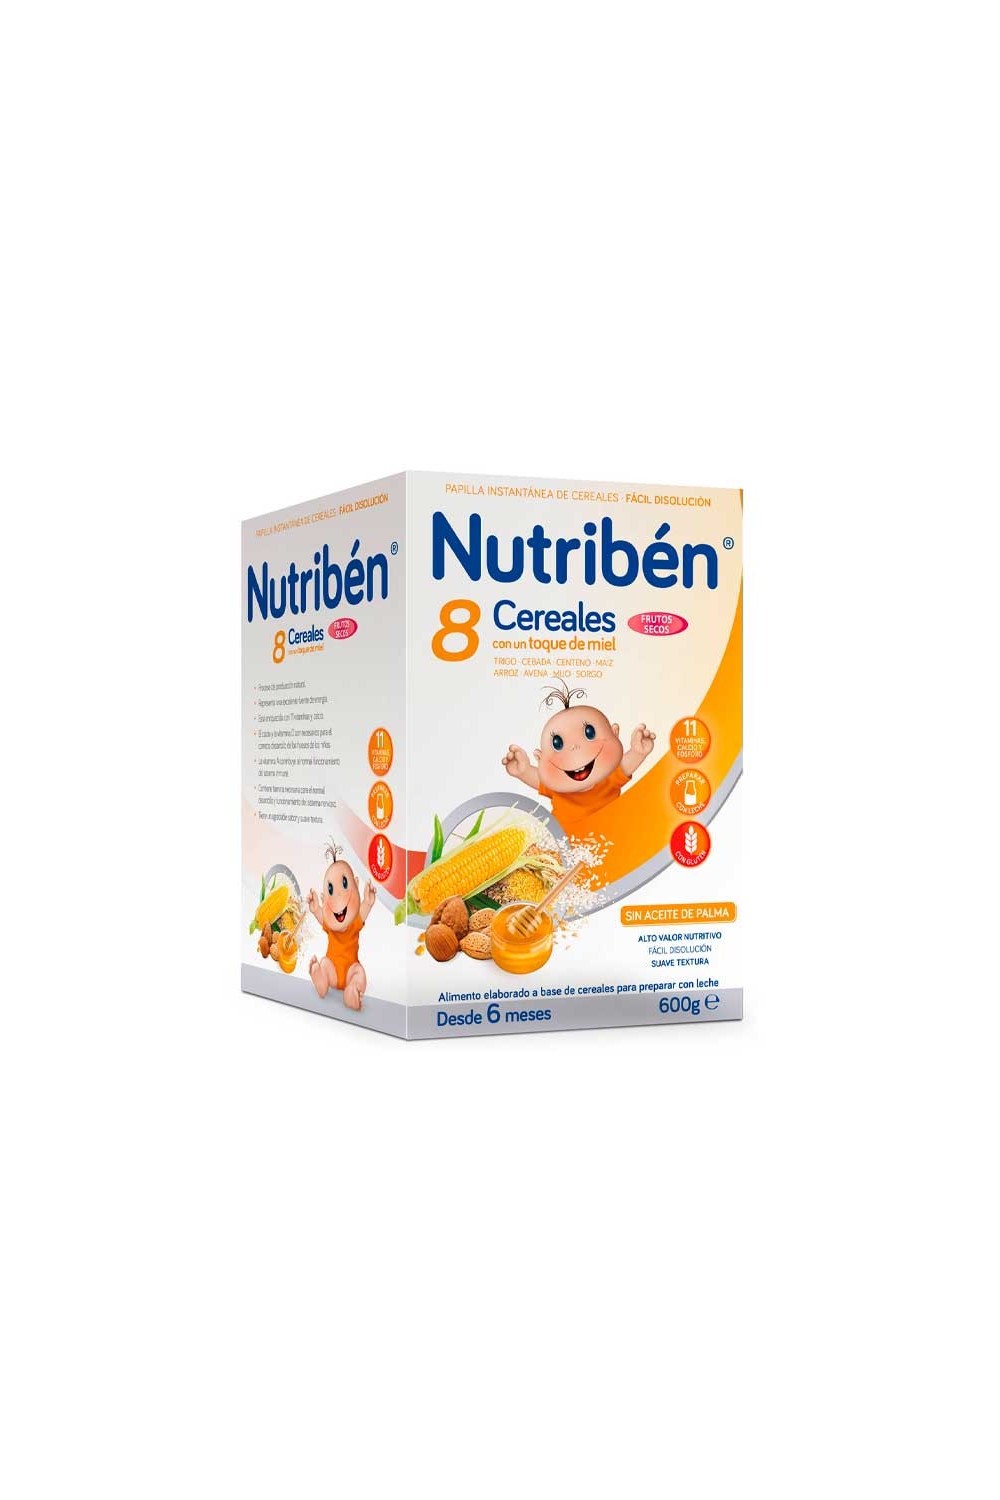 NUTRIBEN - Nutribén 8 Cereals, Honey and Nuts 600g